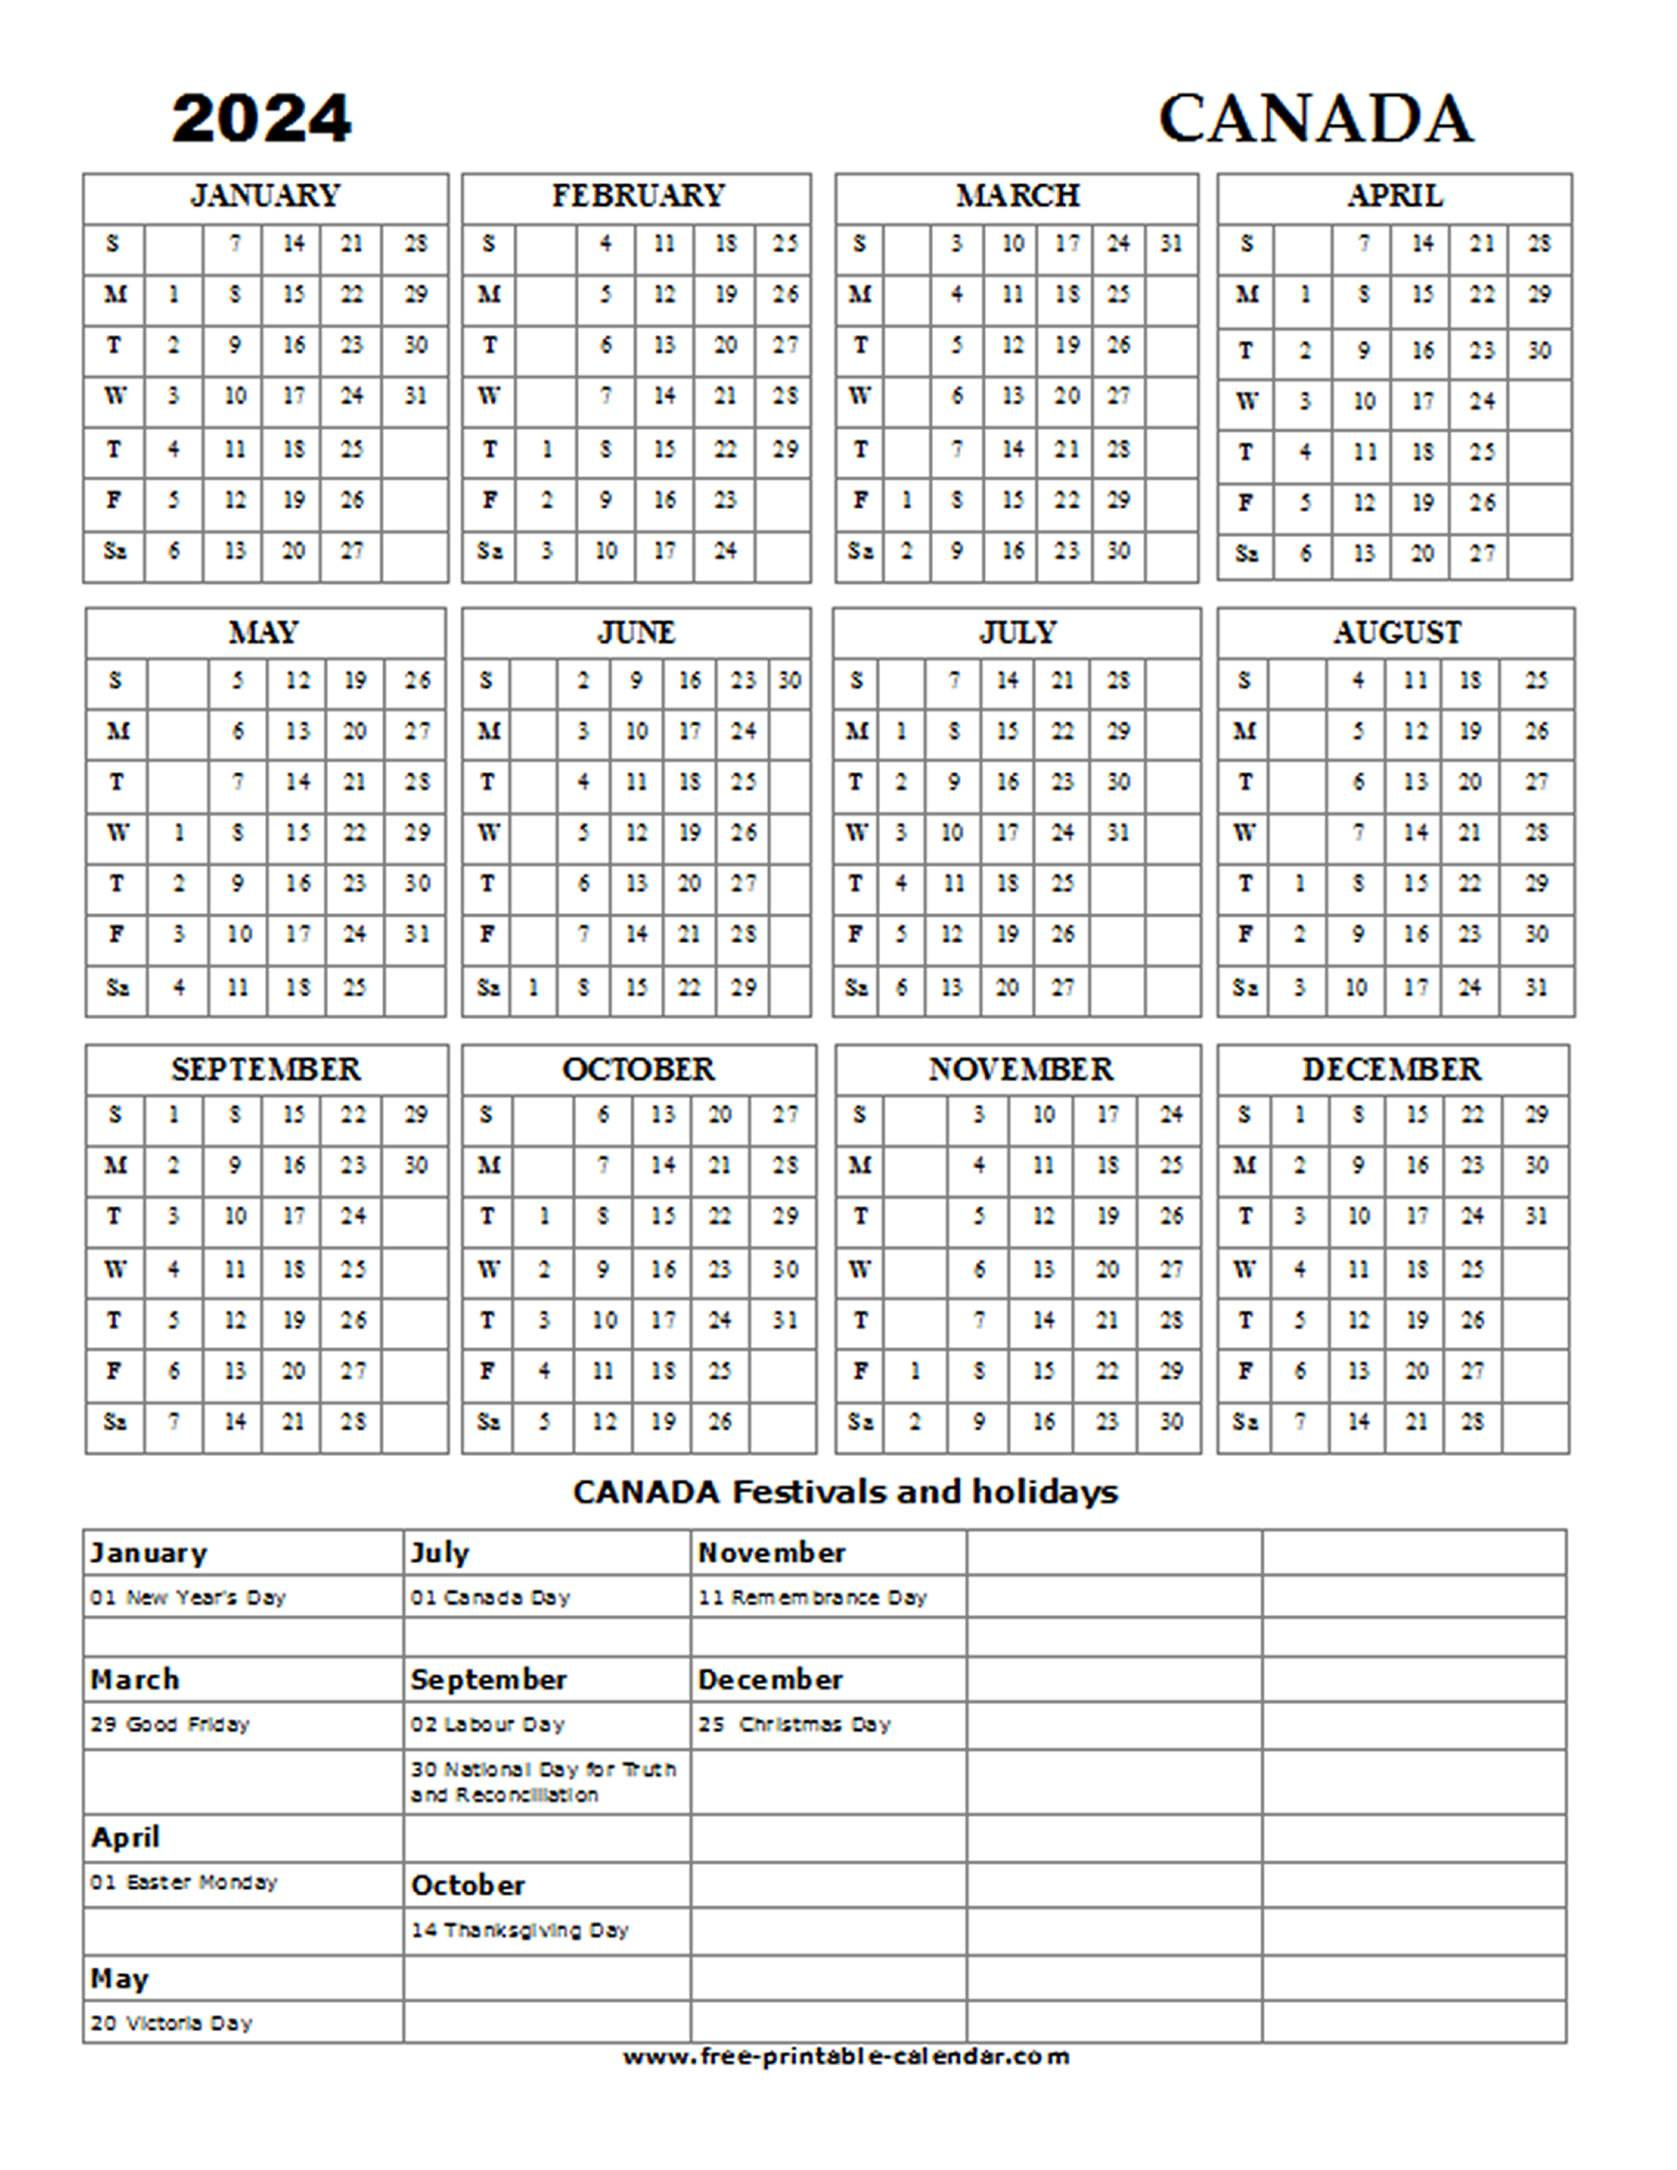 2024 Canada Holiday Calendar - Free-Printable-Calendar | Printable Calendar 2024 Canada